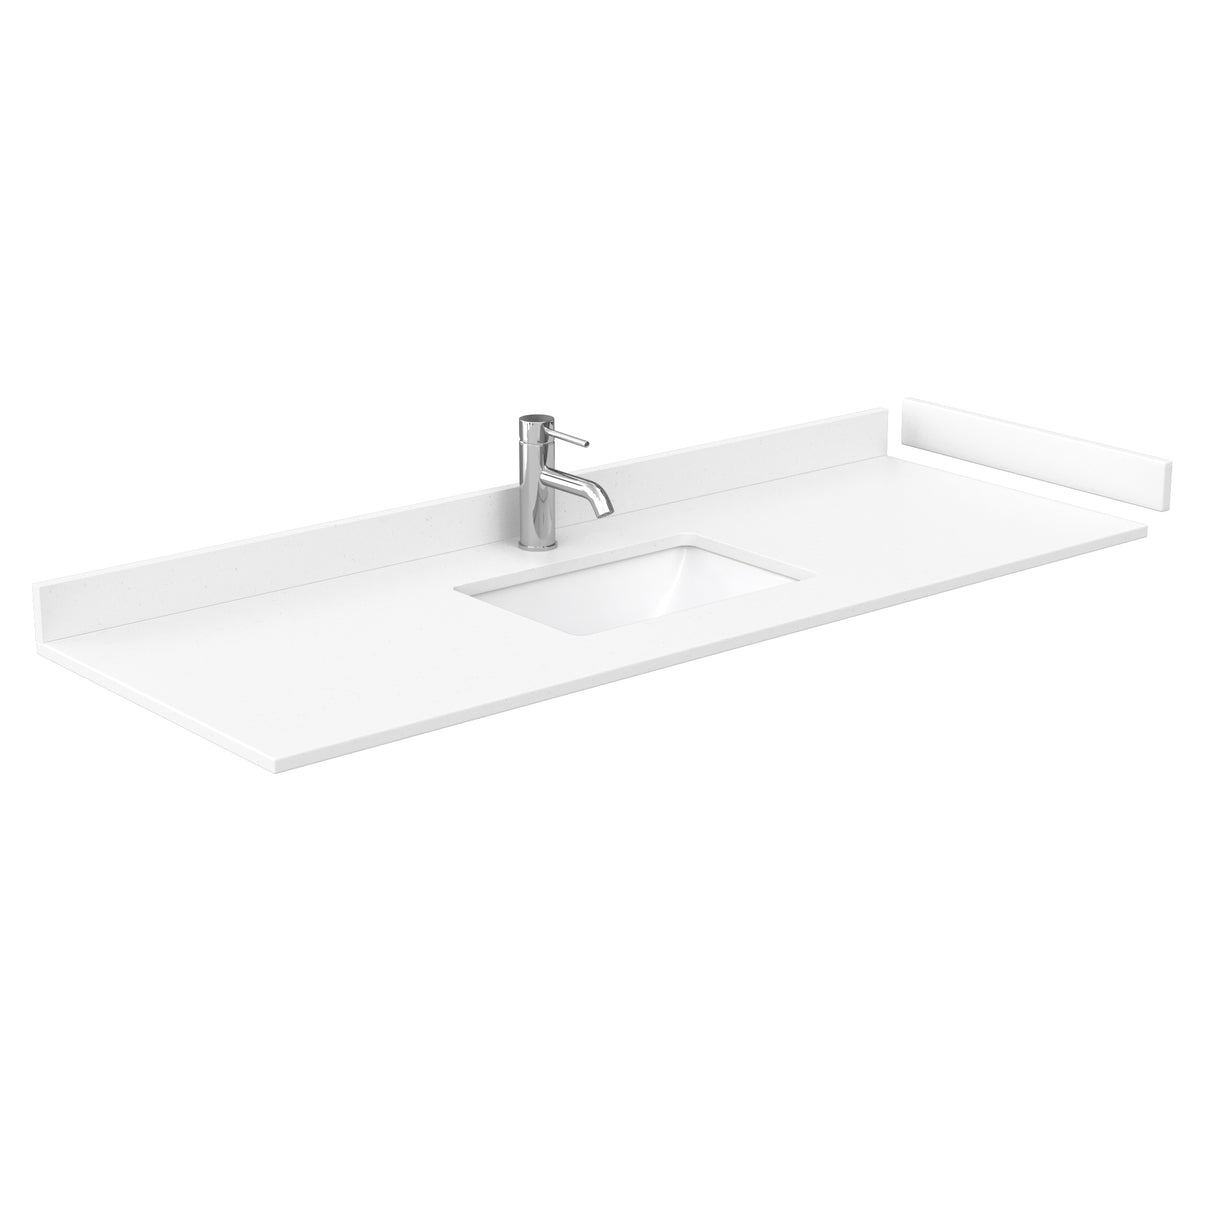 Deborah 60 Inch Single Bathroom Vanity in White White Cultured Marble Countertop Undermount Square Sink No Mirror